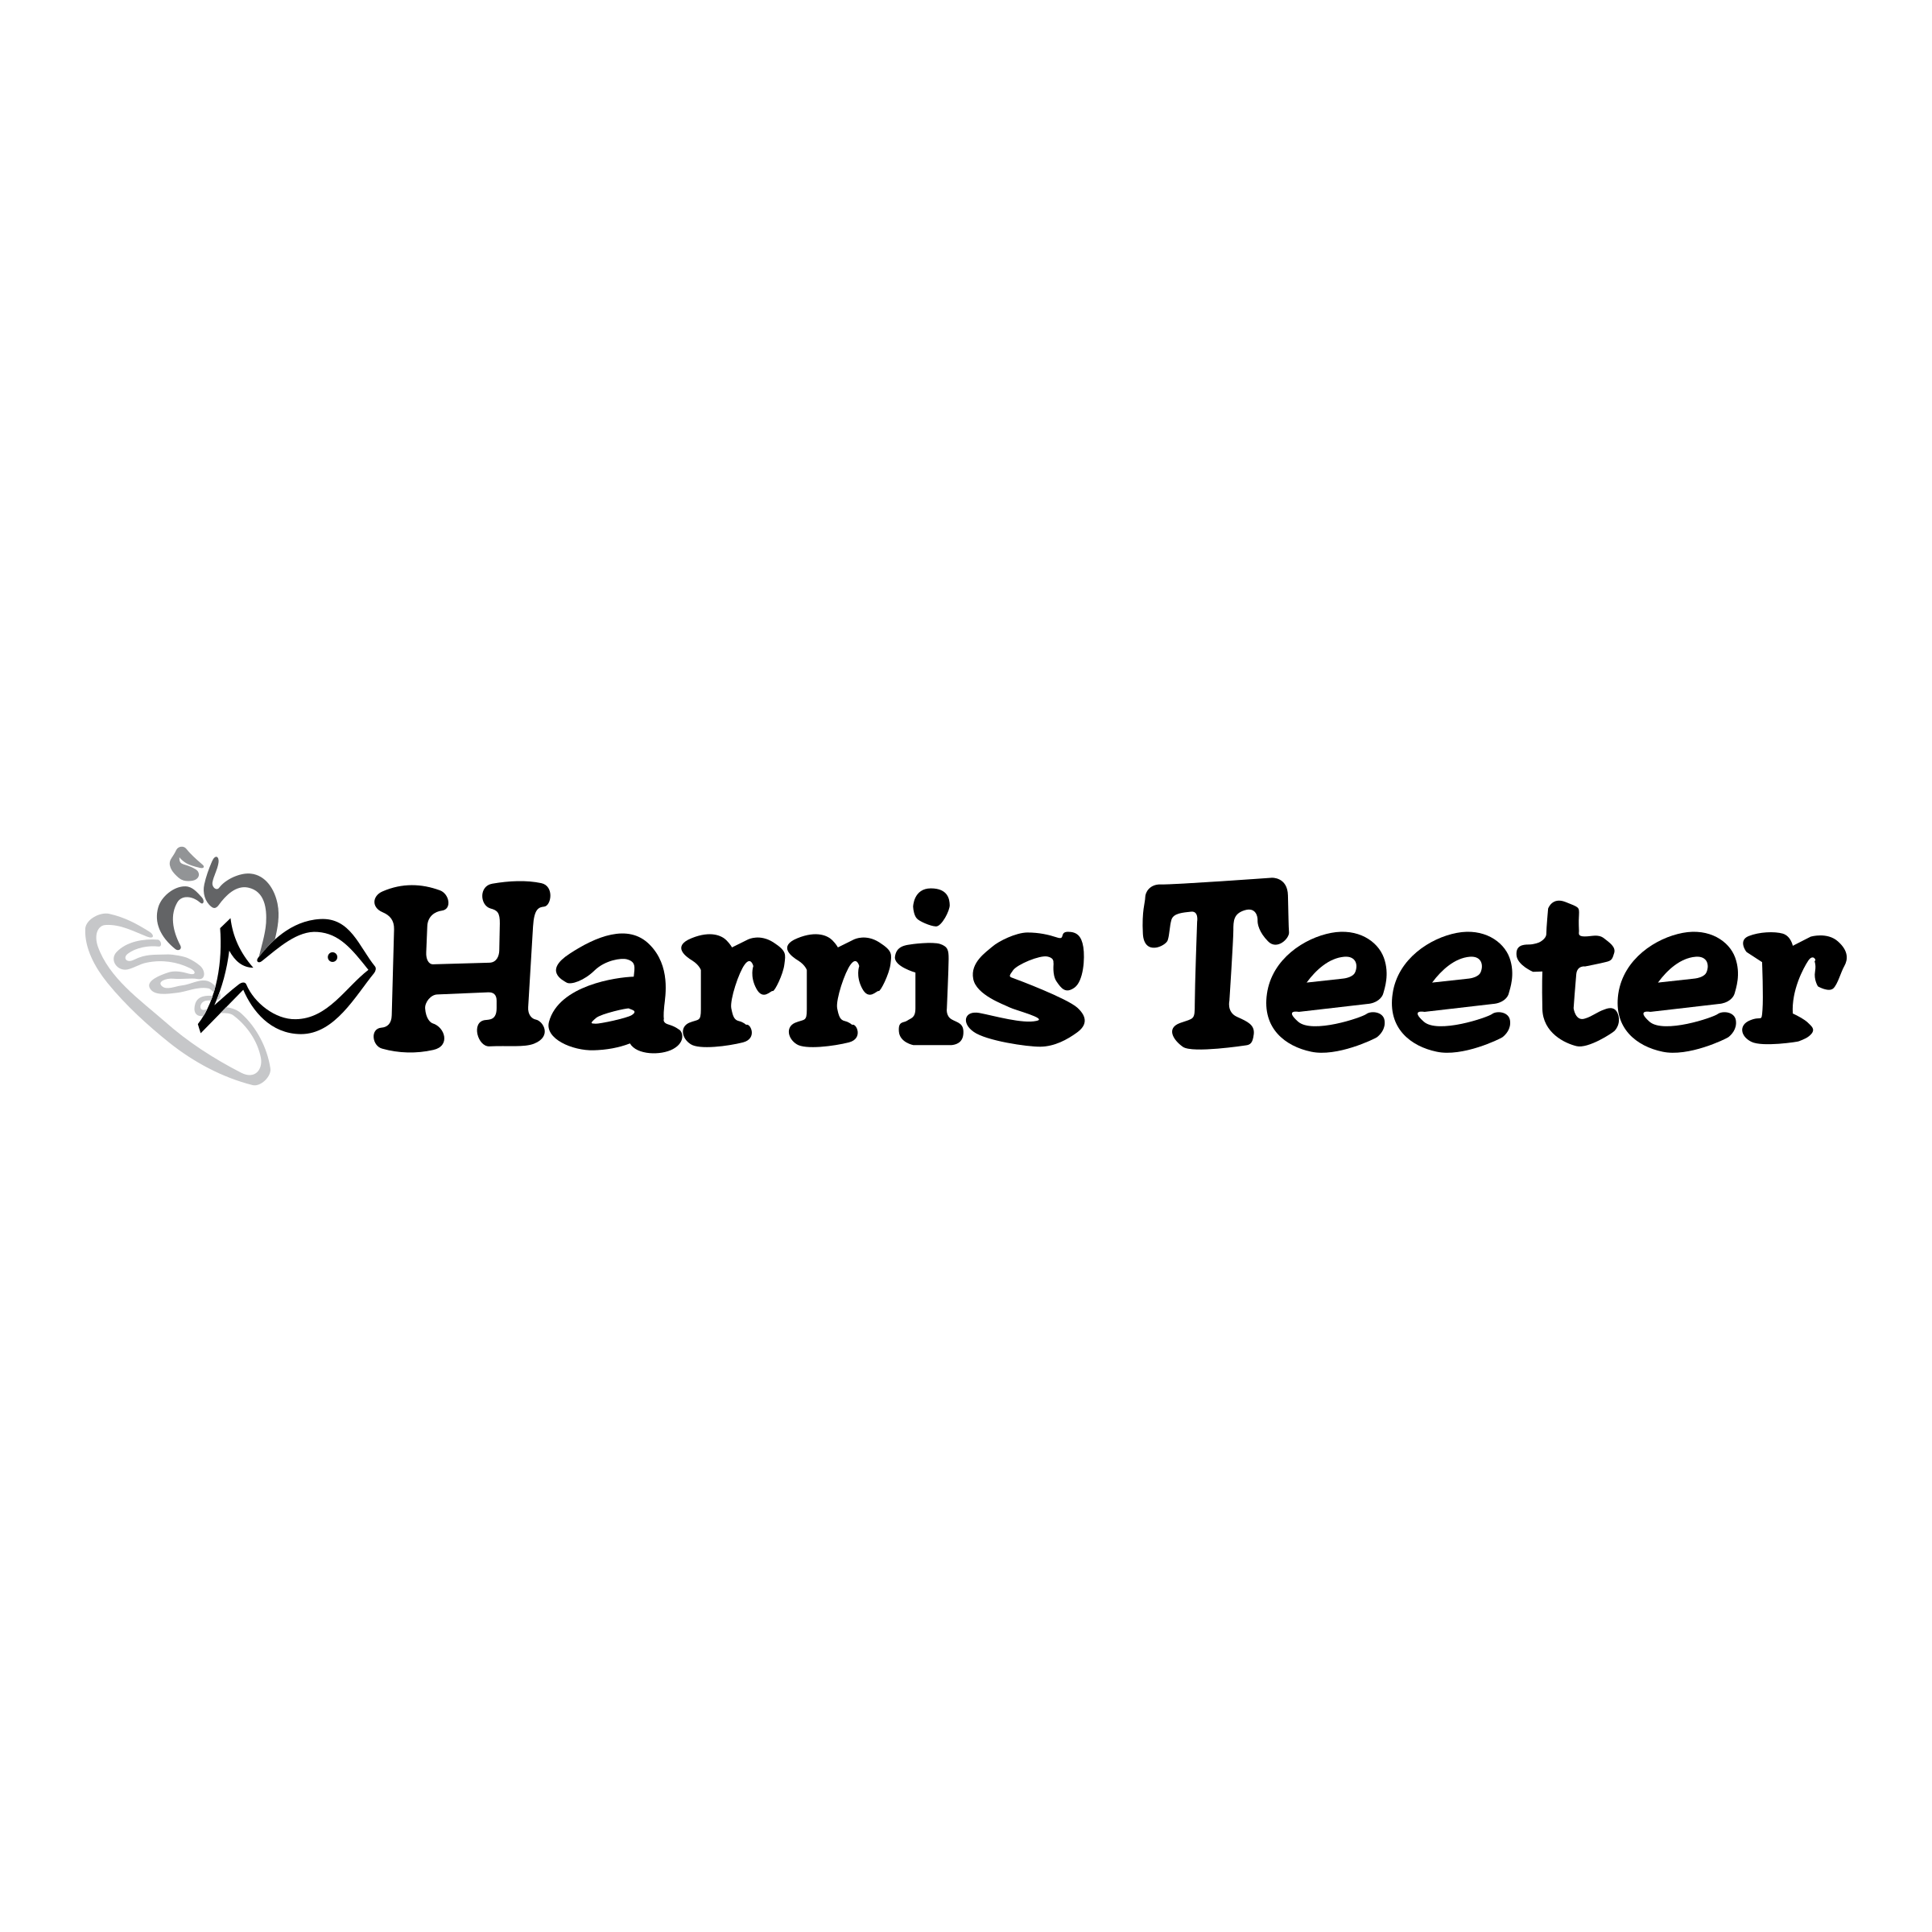 Harris Teeter Logo - Harris Teeter Logo PNG Transparent & SVG Vector - Freebie Supply